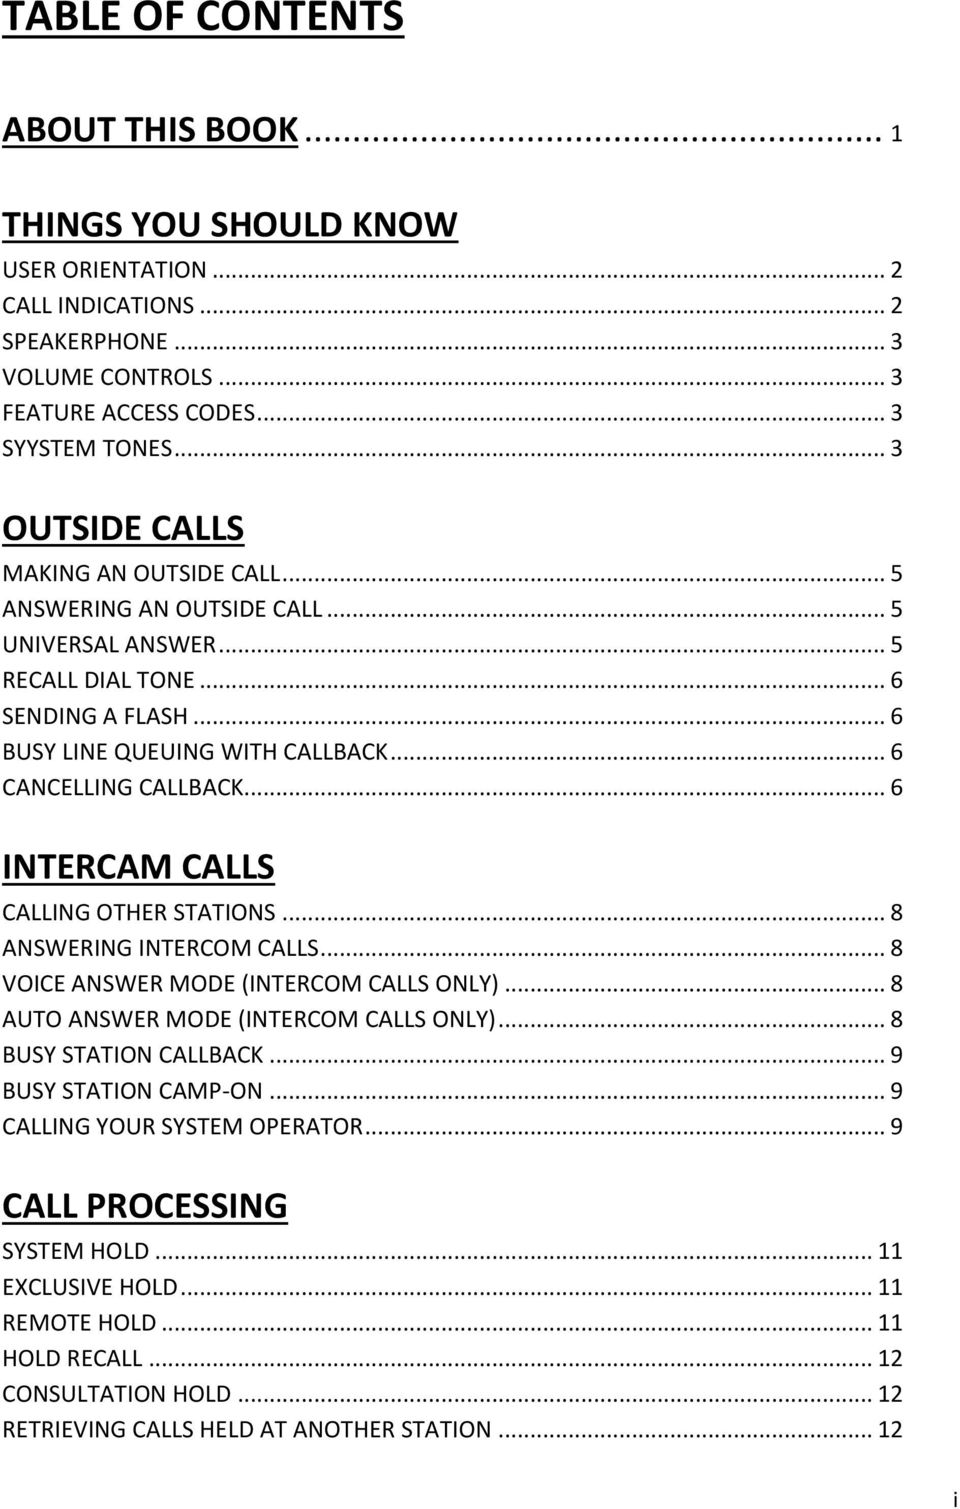 .. 6 INTERCAM CALLS CALLING OTHER STATIONS... 8 ANSWERING INTERCOM CALLS... 8 VOICE ANSWER MODE (INTERCOM CALLS ONLY)... 8 AUTO ANSWER MODE (INTERCOM CALLS ONLY)... 8 BUSY STATION CALLBACK.